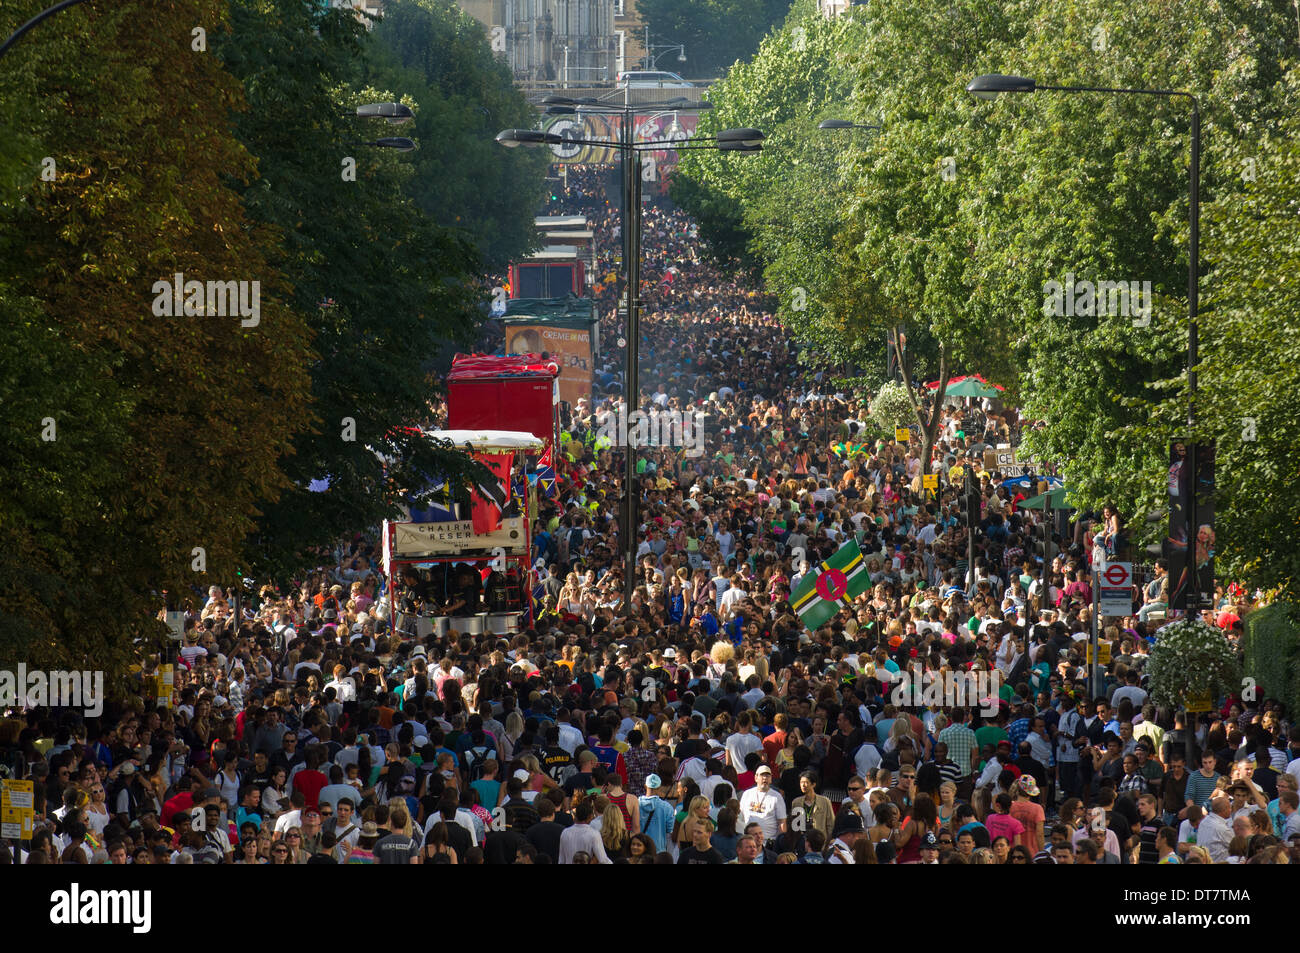 Grande foule de Ladbroke Grove regarder les chars du carnaval cortège, carnaval de Notting Hill, Londres, Angleterre Banque D'Images